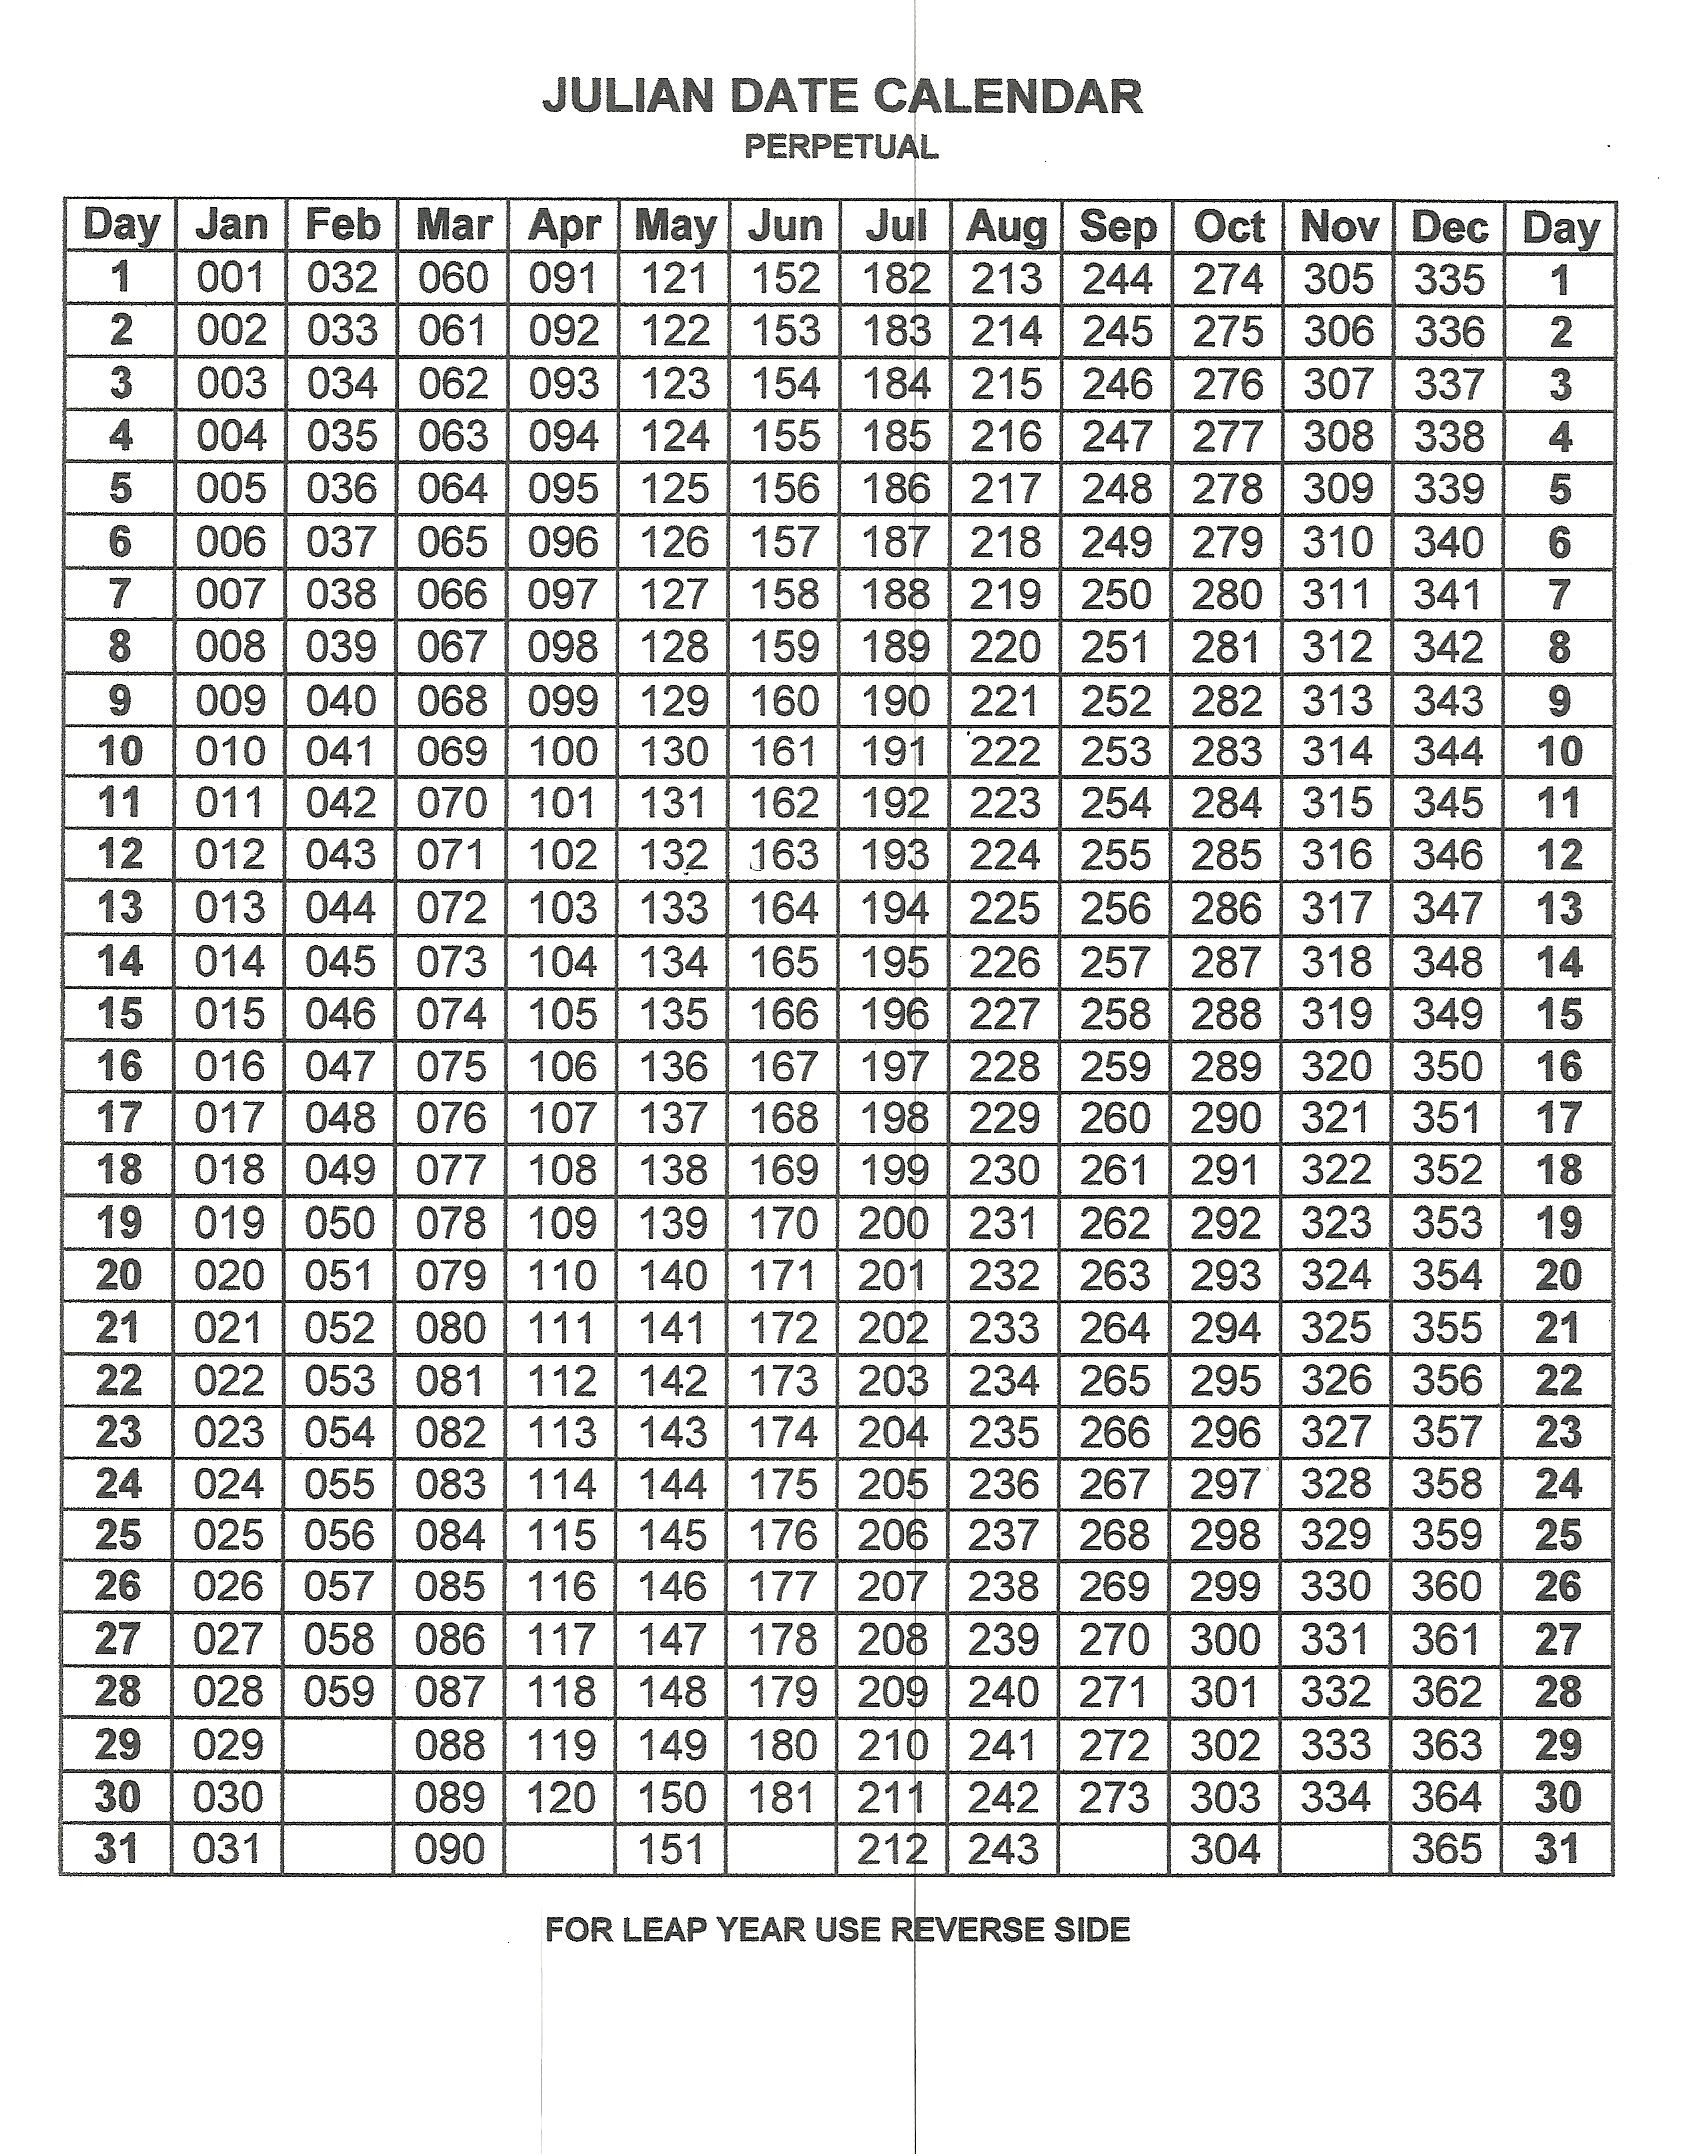 Perpetual Julian Date Calendar | Julian Dates, Calendar Julian Date 2021